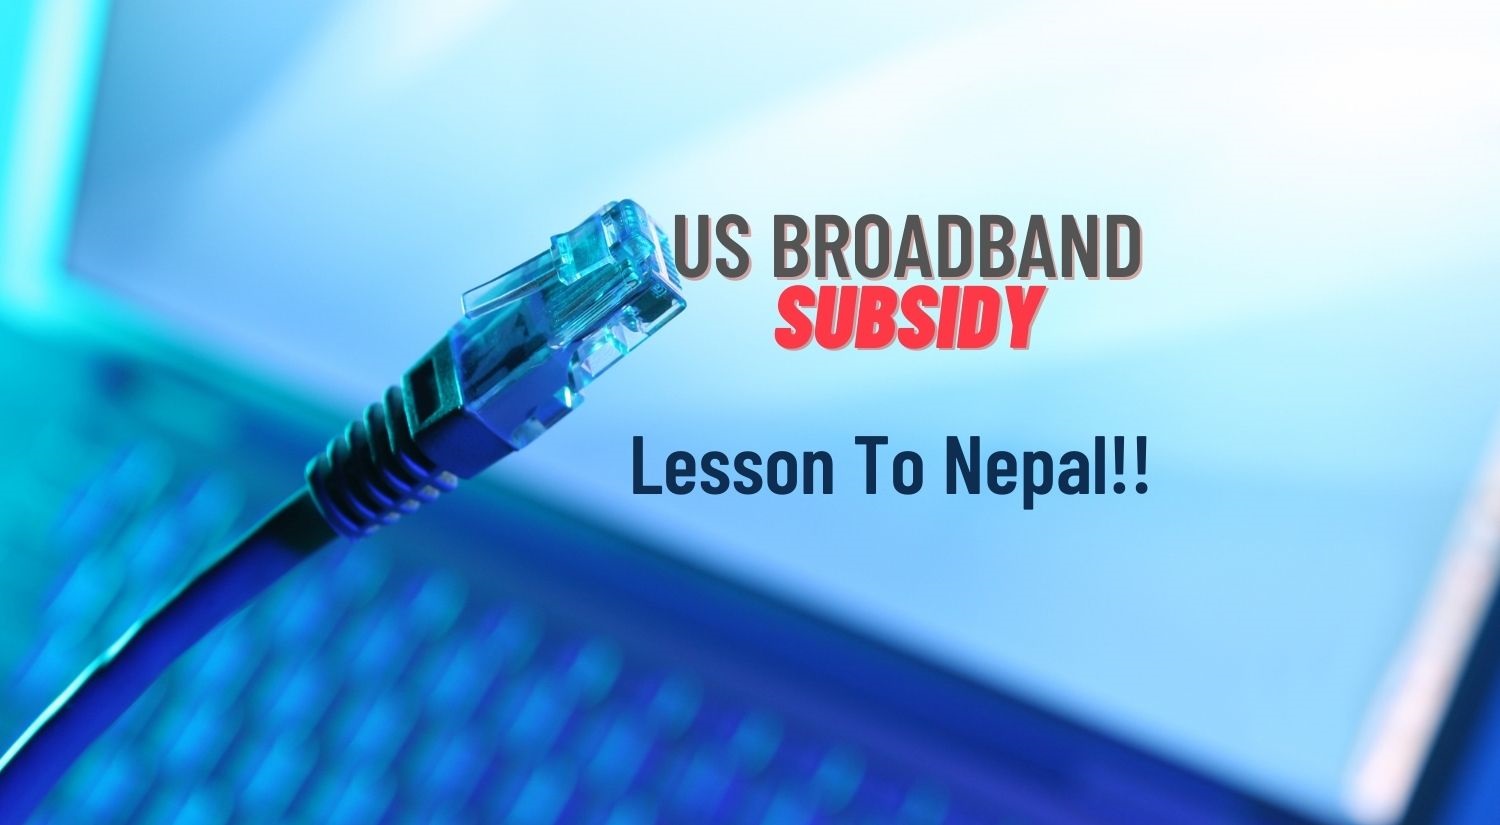 US broadband subsidy lesson to Nepal